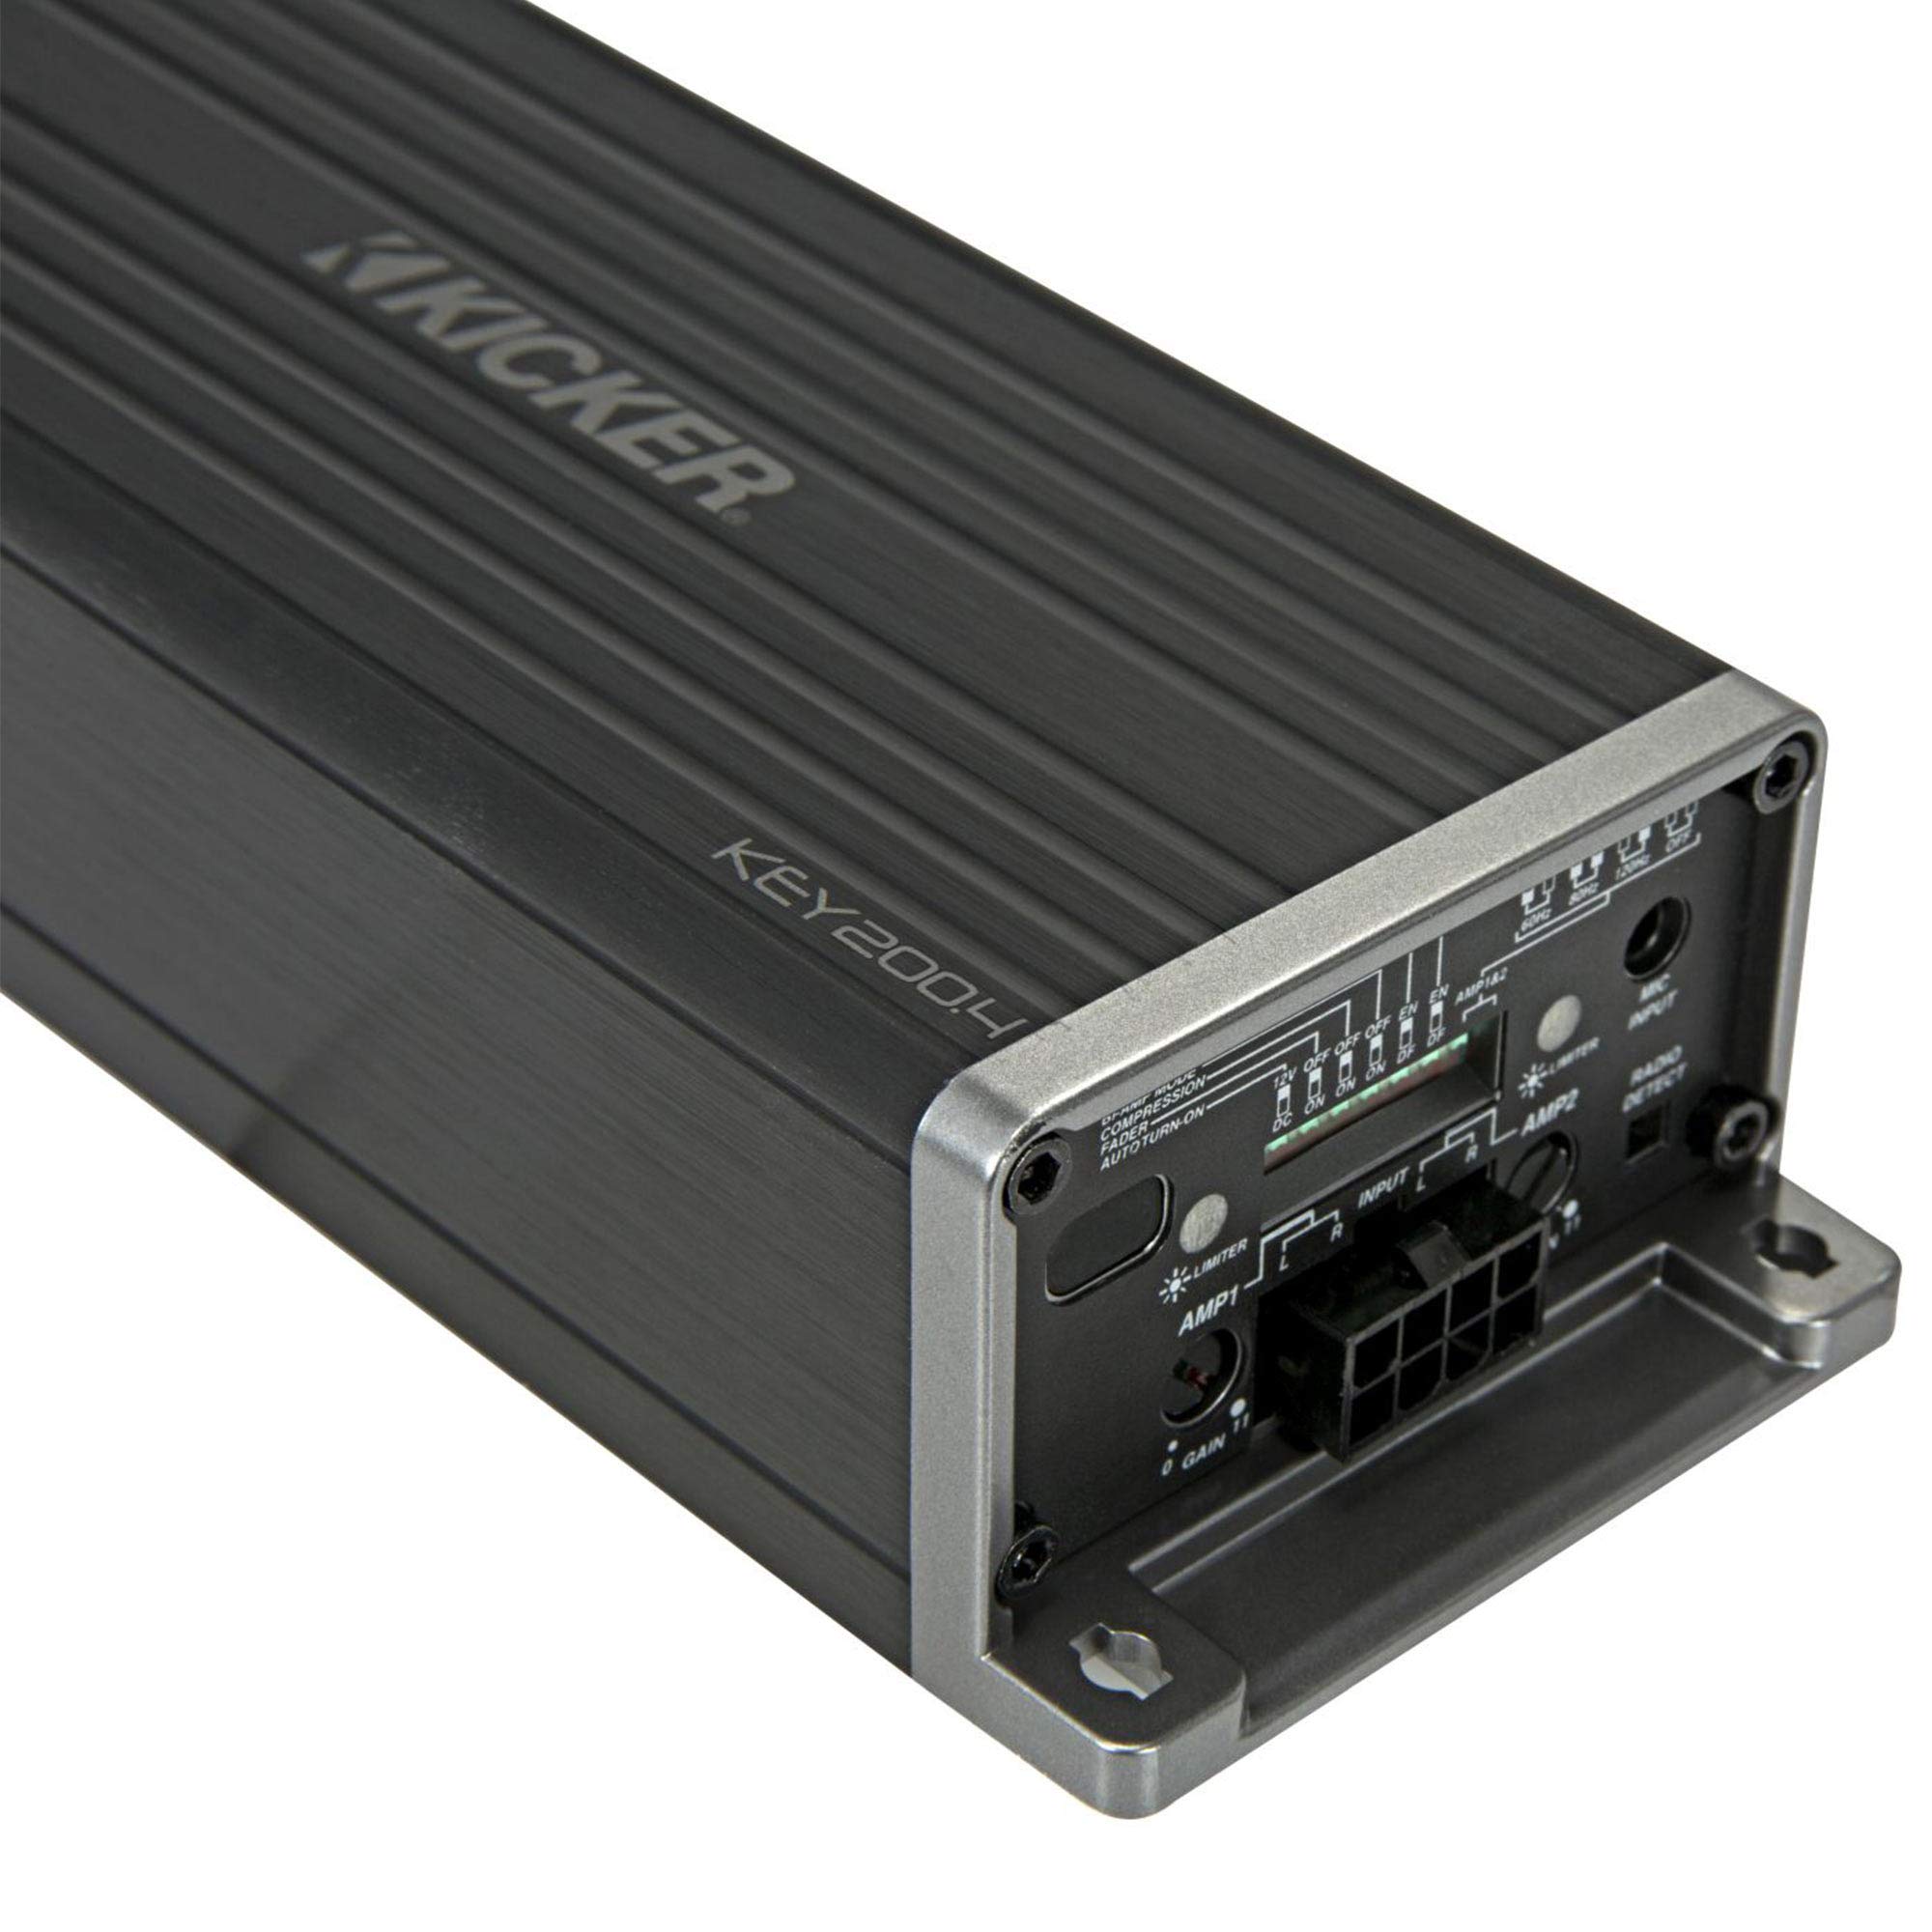 KICKER KEY2004 200w 4-Channel Amplifier w/Auto-EQ/Processor) Smart Amp 47KEY2004